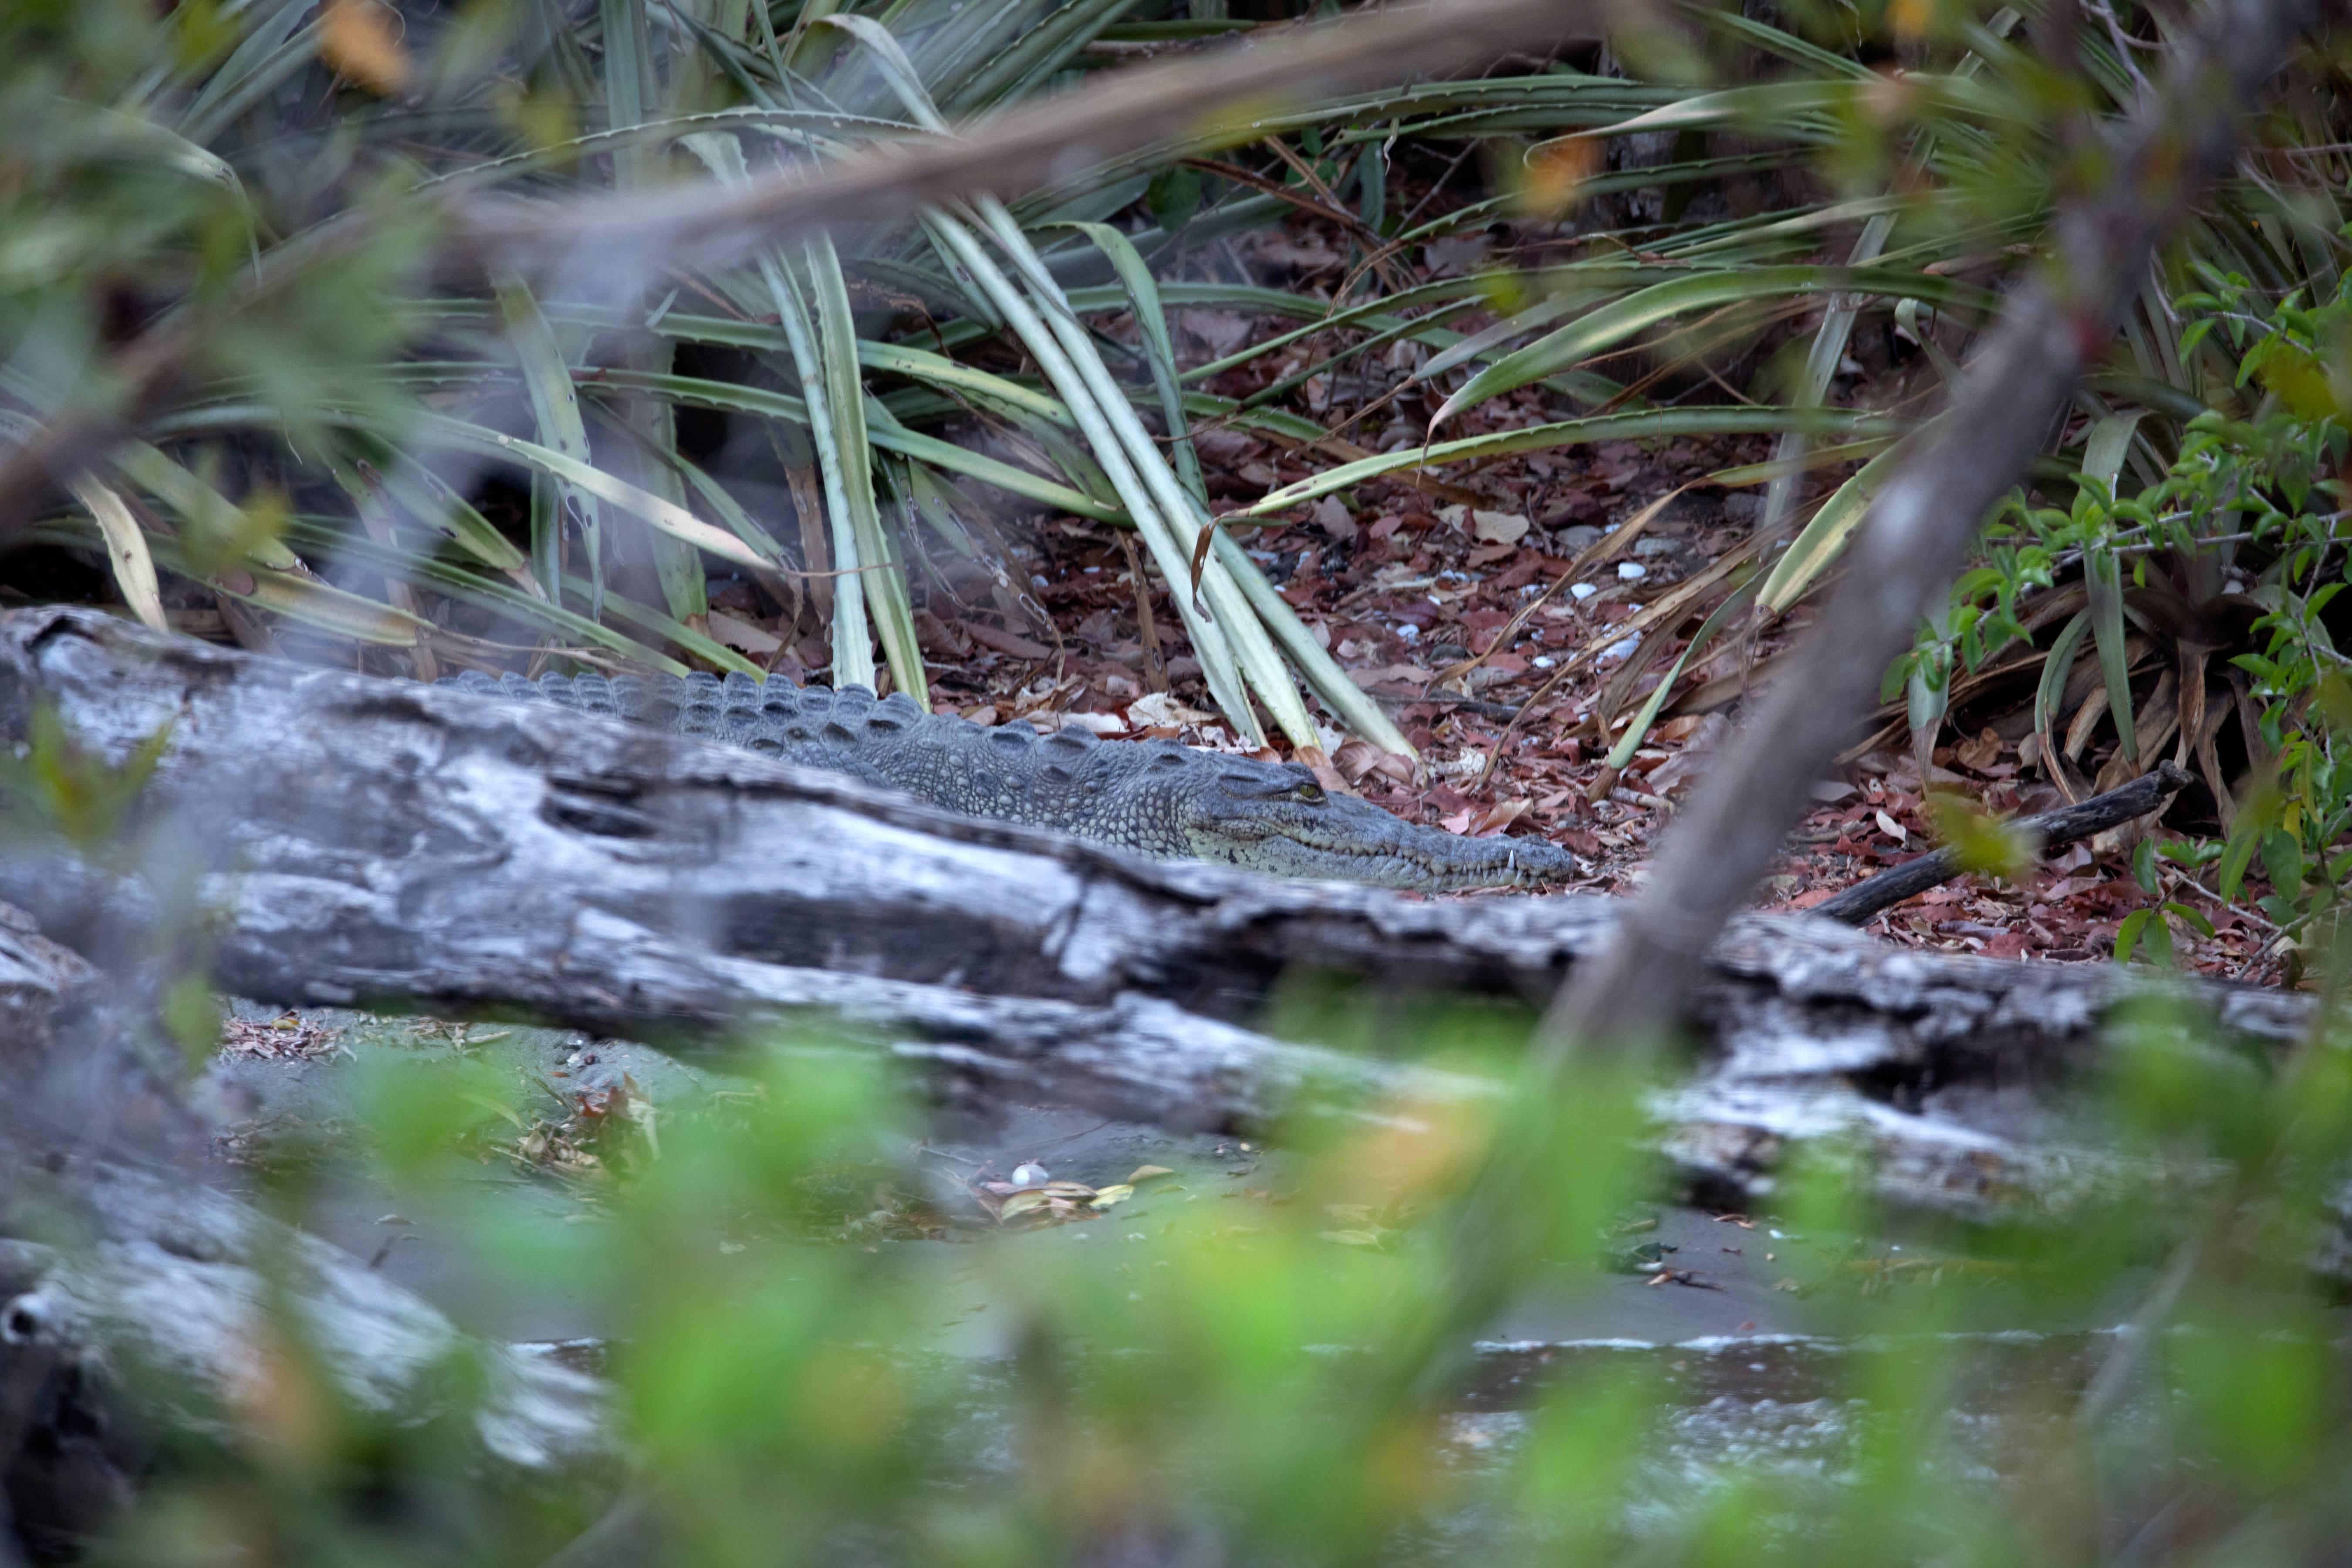 Crocodile by log, Costa Rica